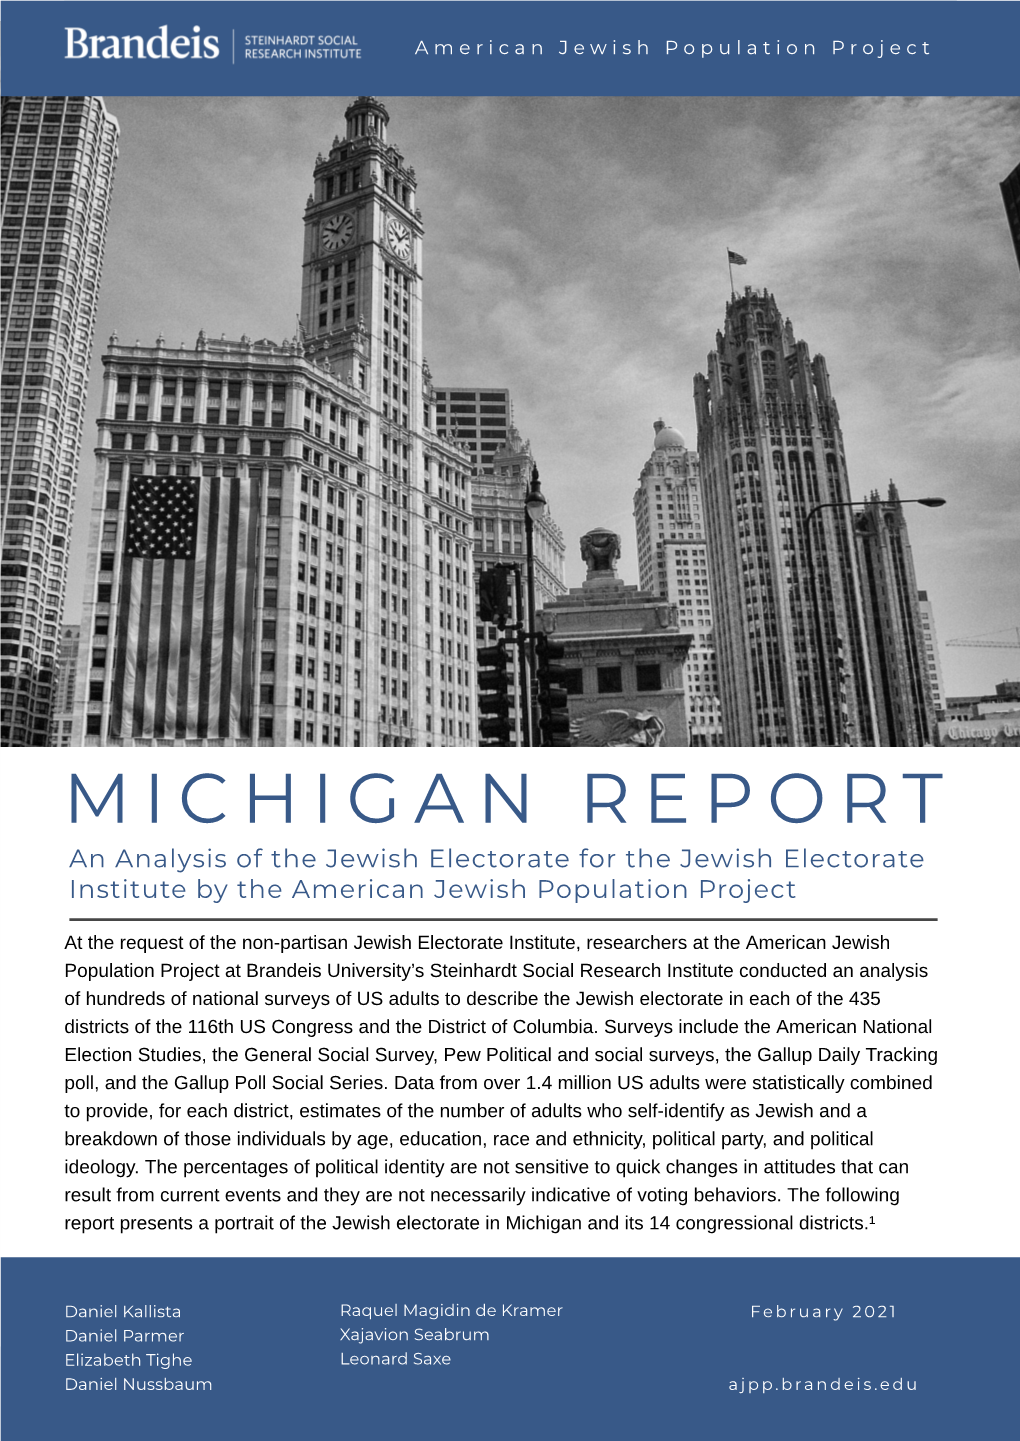 MICHIGAN REPORT an Analysis of the Jewish Electorate for the Jewish Electorate Institute by the American Jewish Population Project